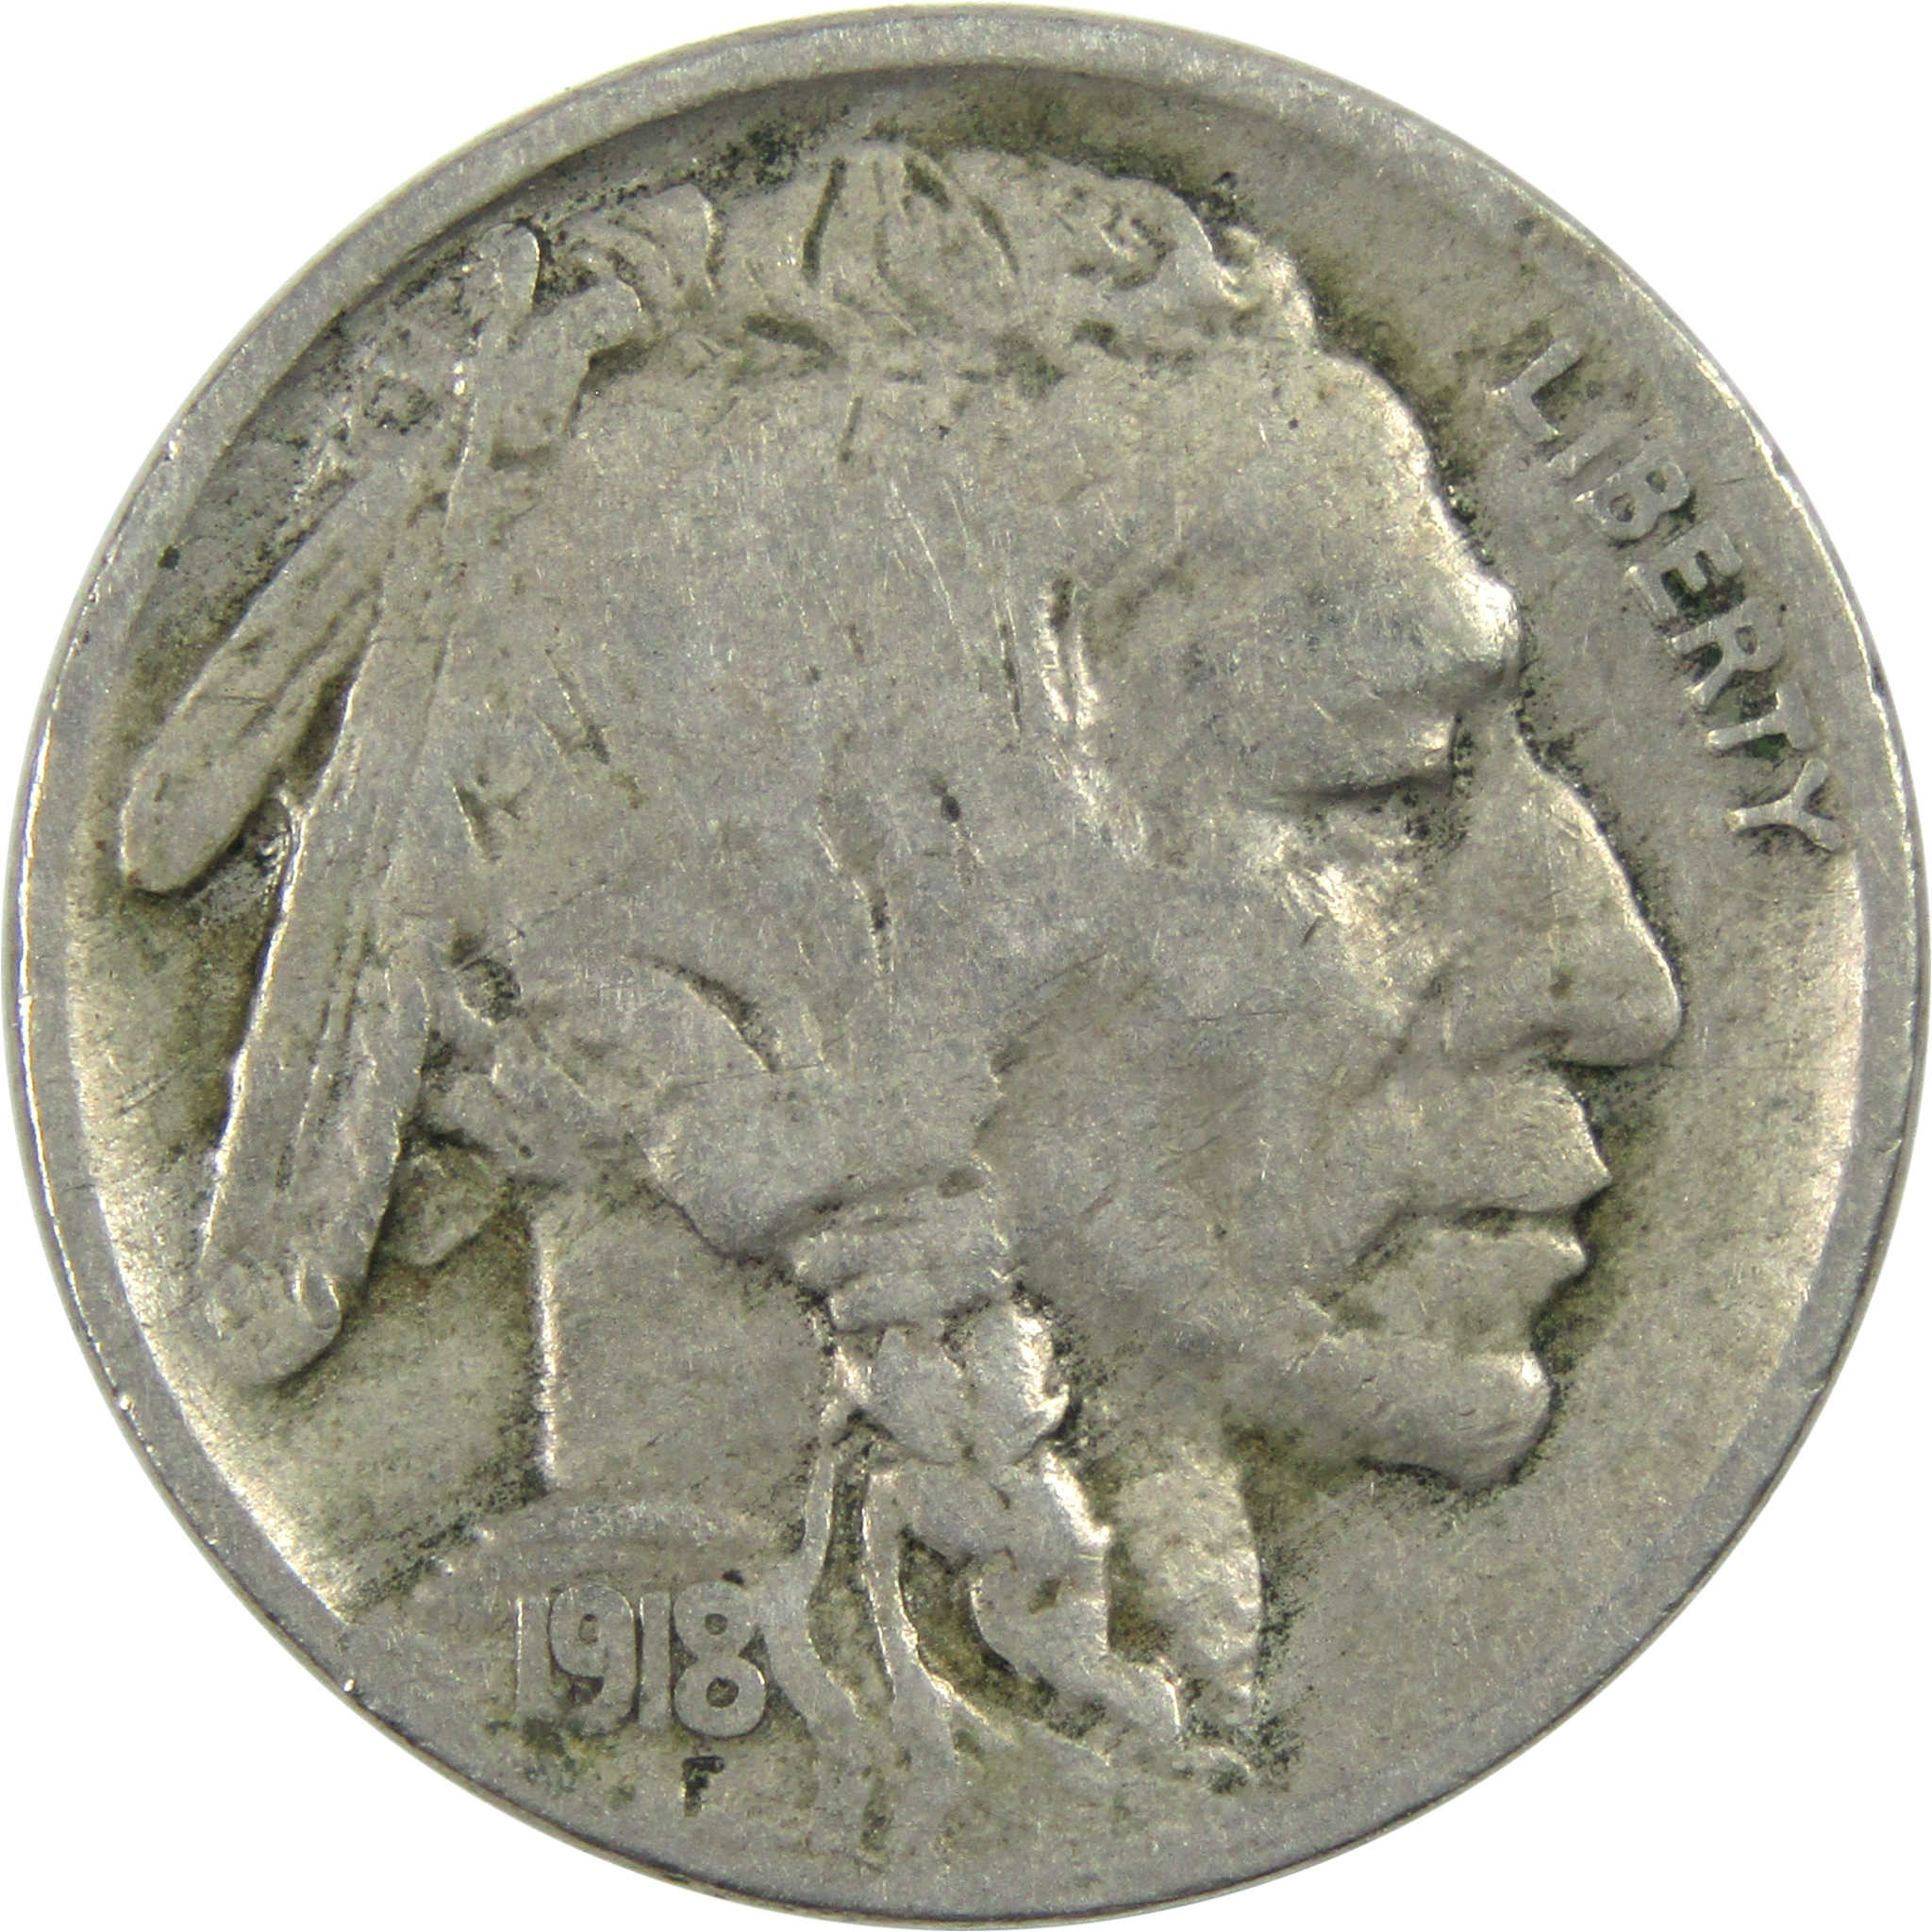 1918 Indian Head Buffalo Nickel F Fine Details 5c Coin SKU:I12981